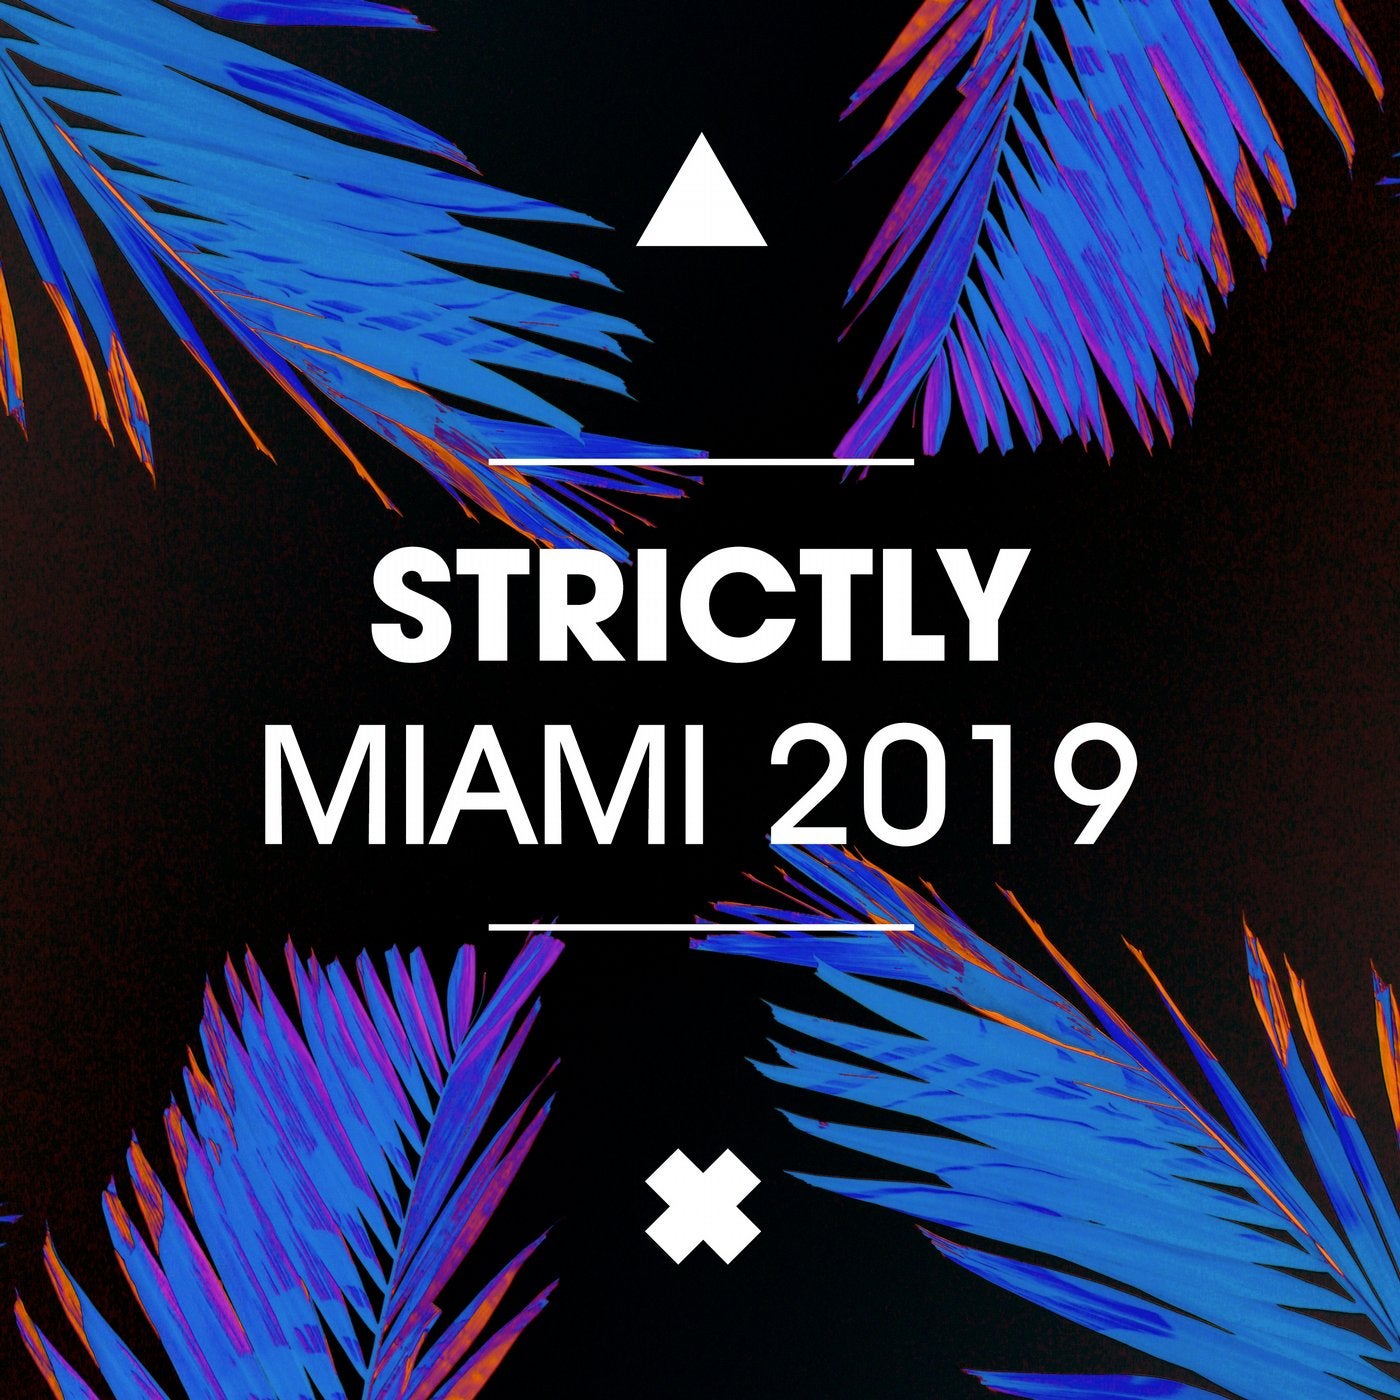 Strictly Miami 2019